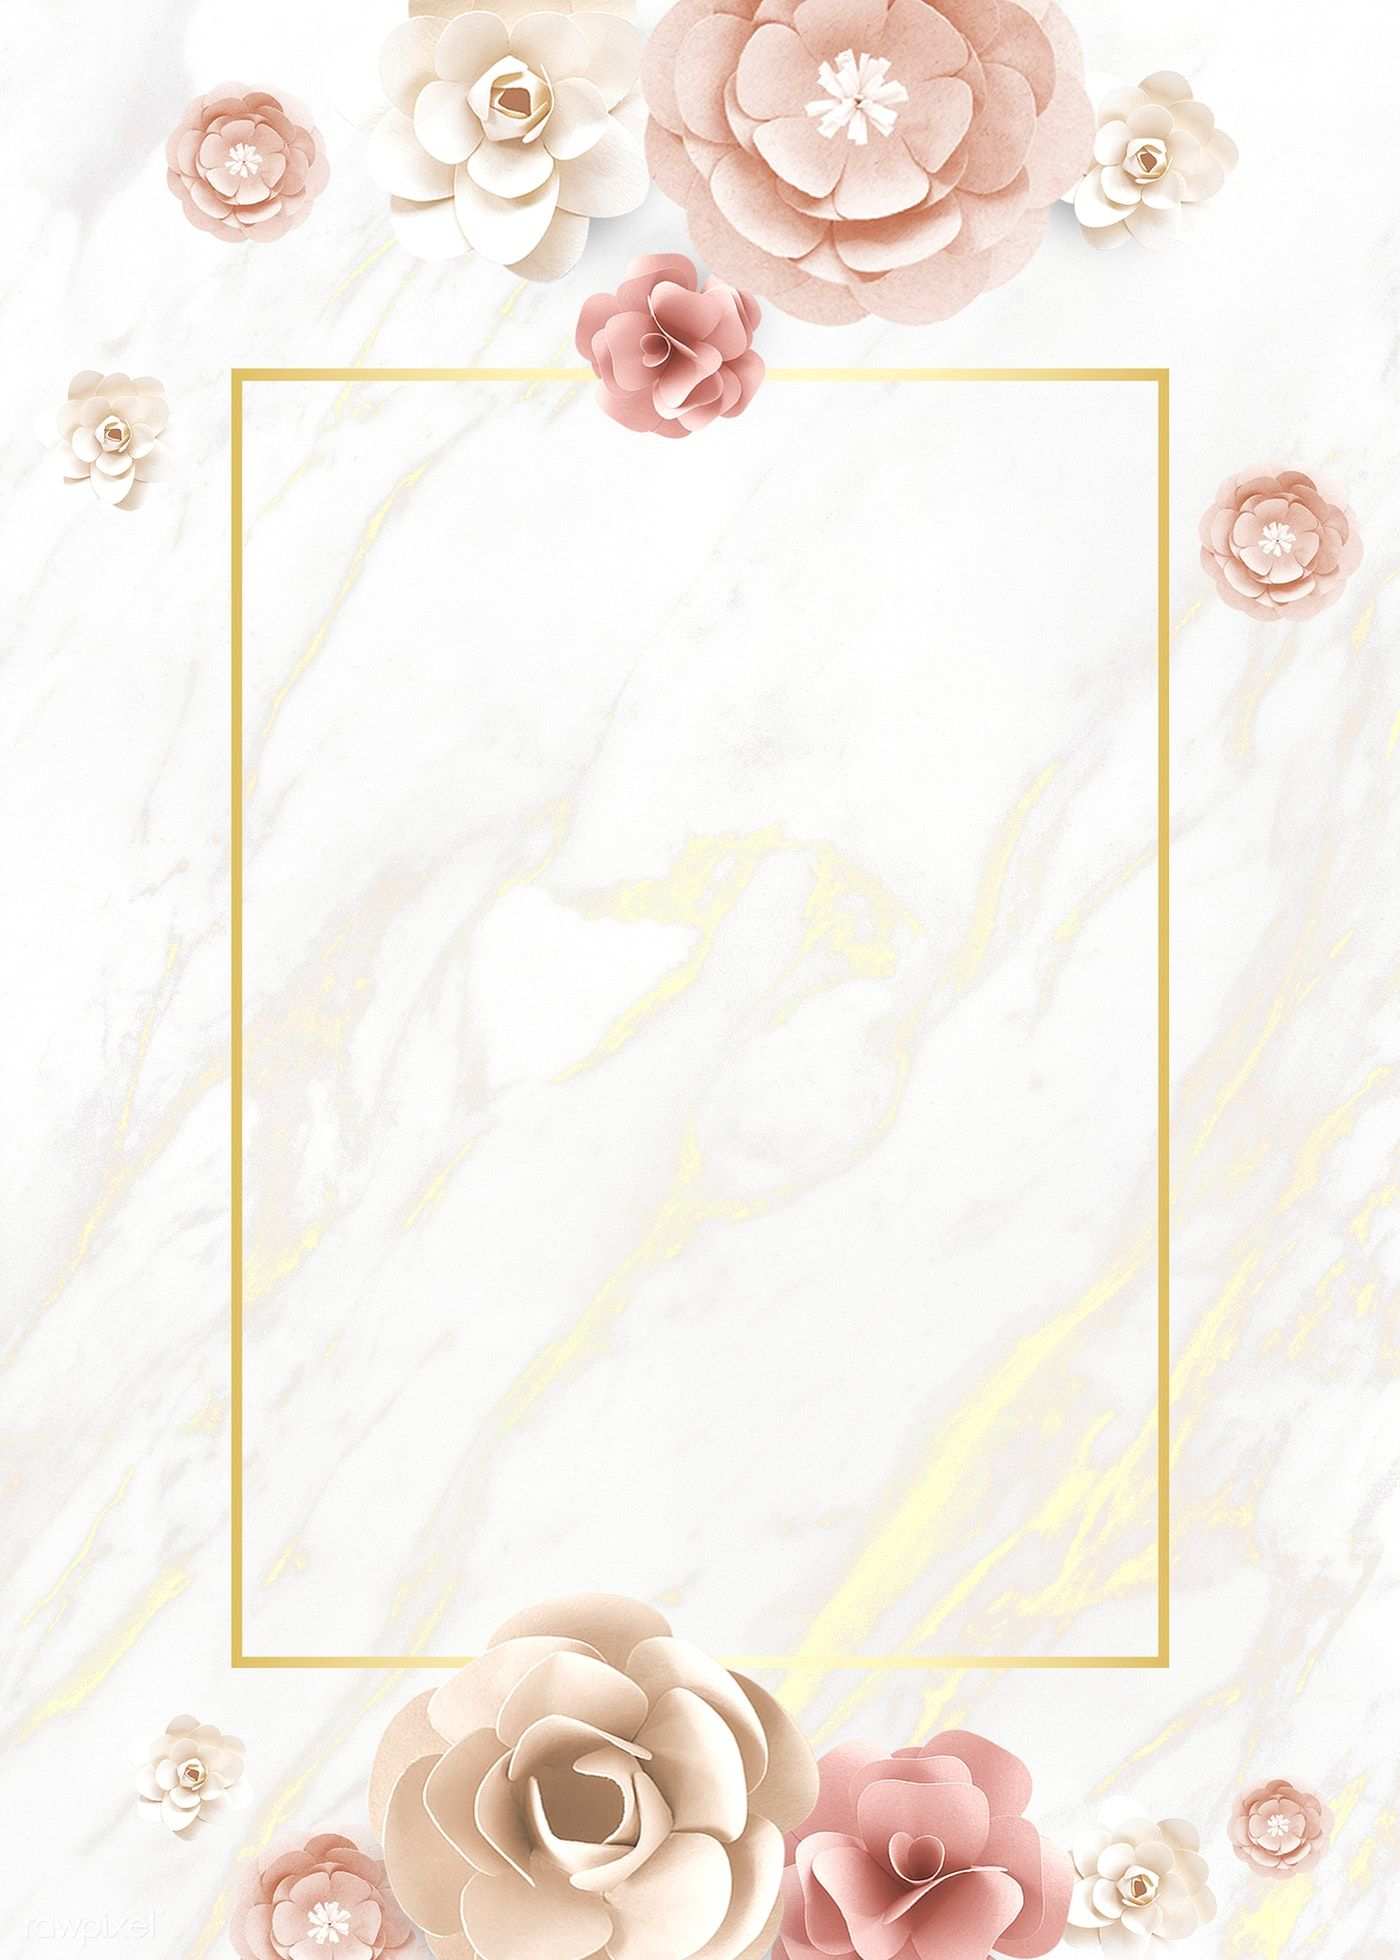 Download Premium Illustration Of Paper Craft Flower Element Card